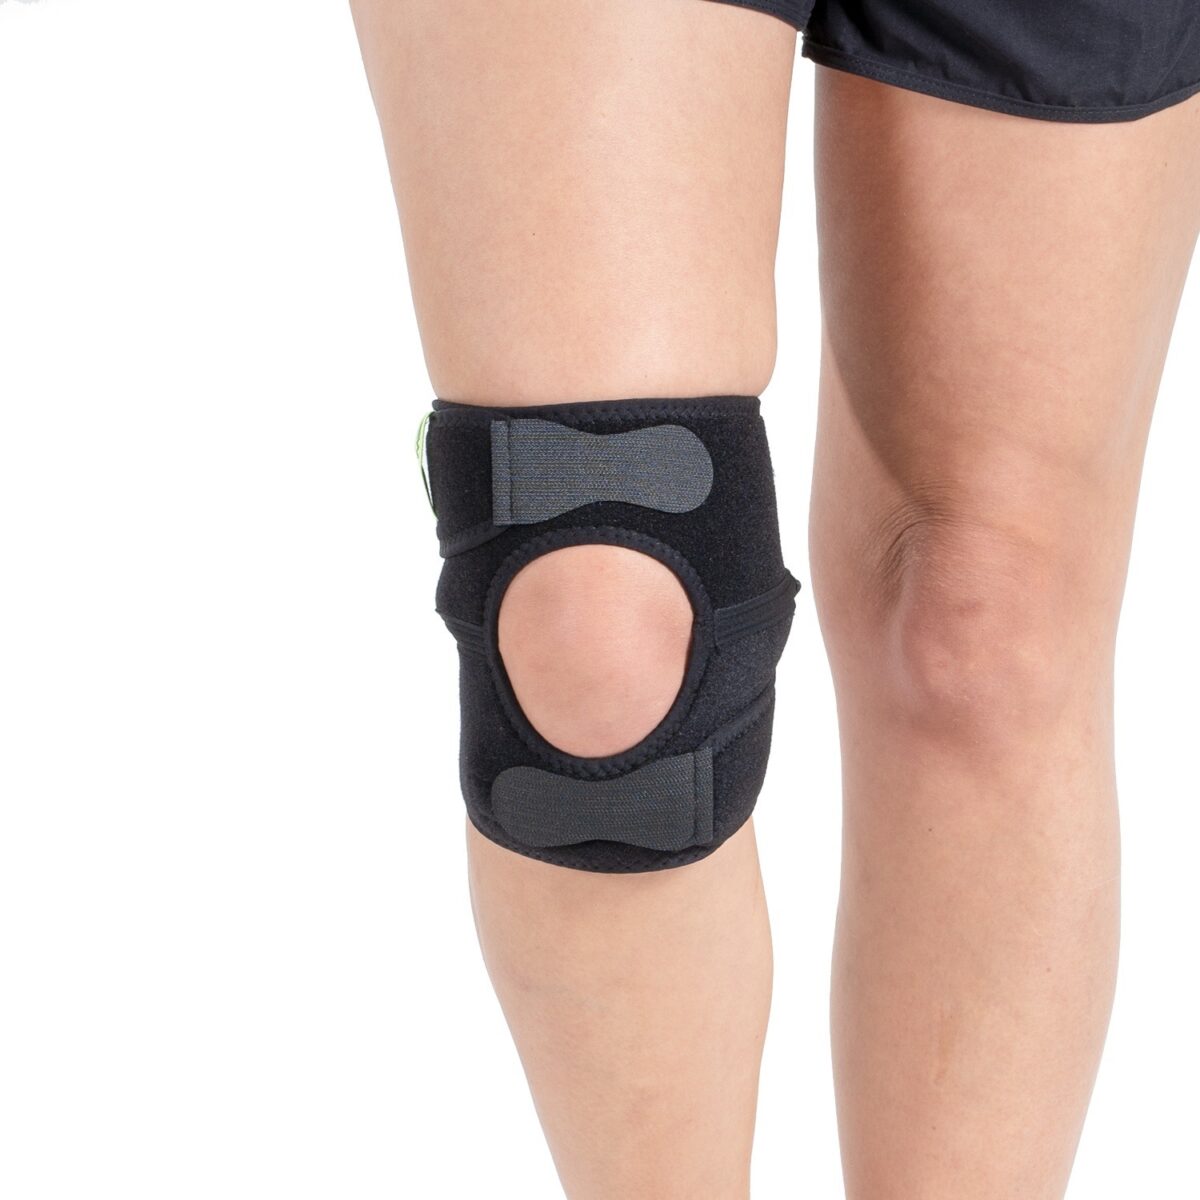 wingmed orthopedic equipments W521 knee support for patellar tendon 17